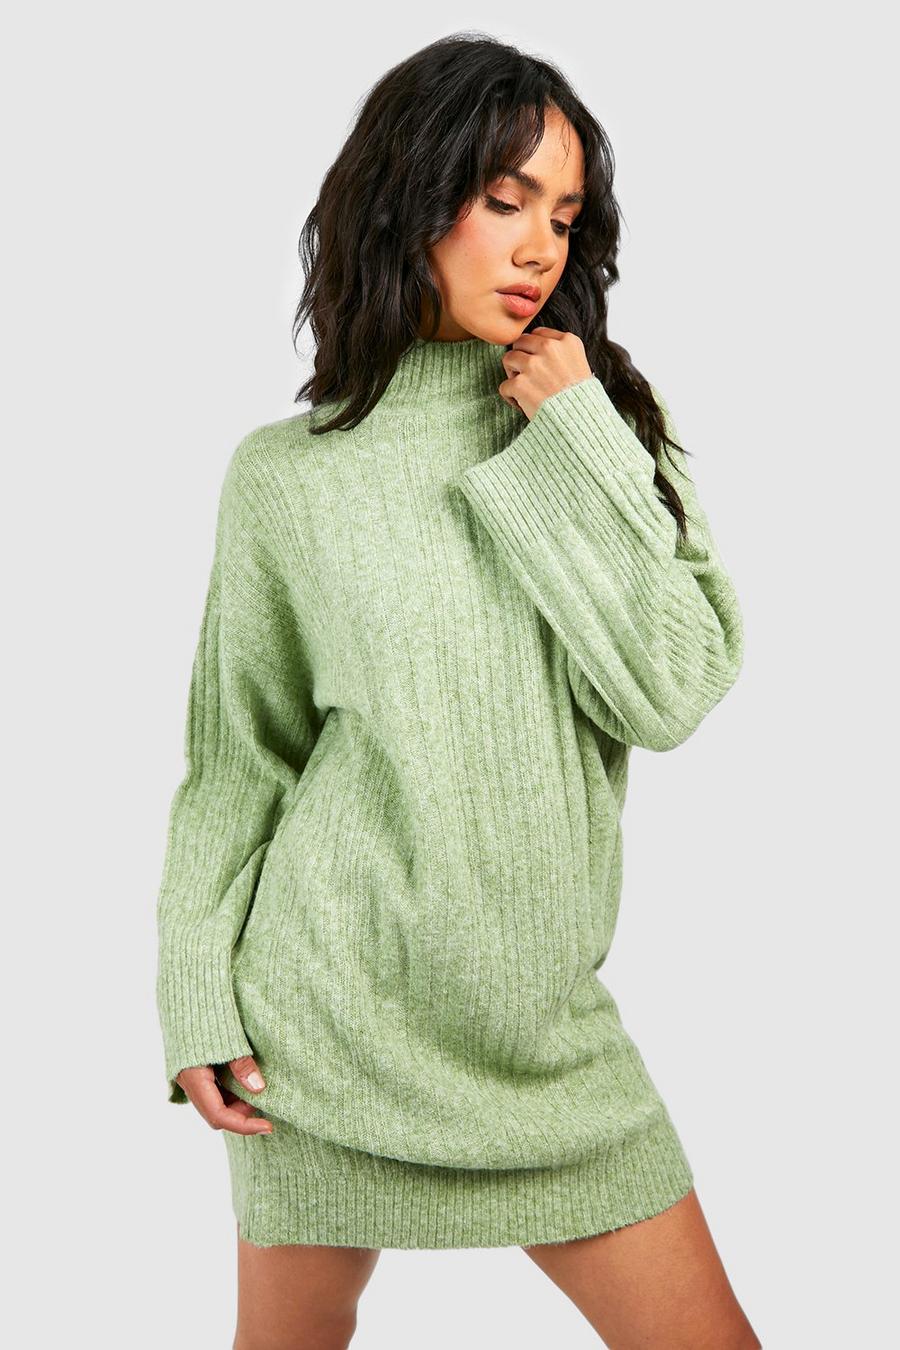 Apple green Soft Mixed Rib Knit Sweater Dress